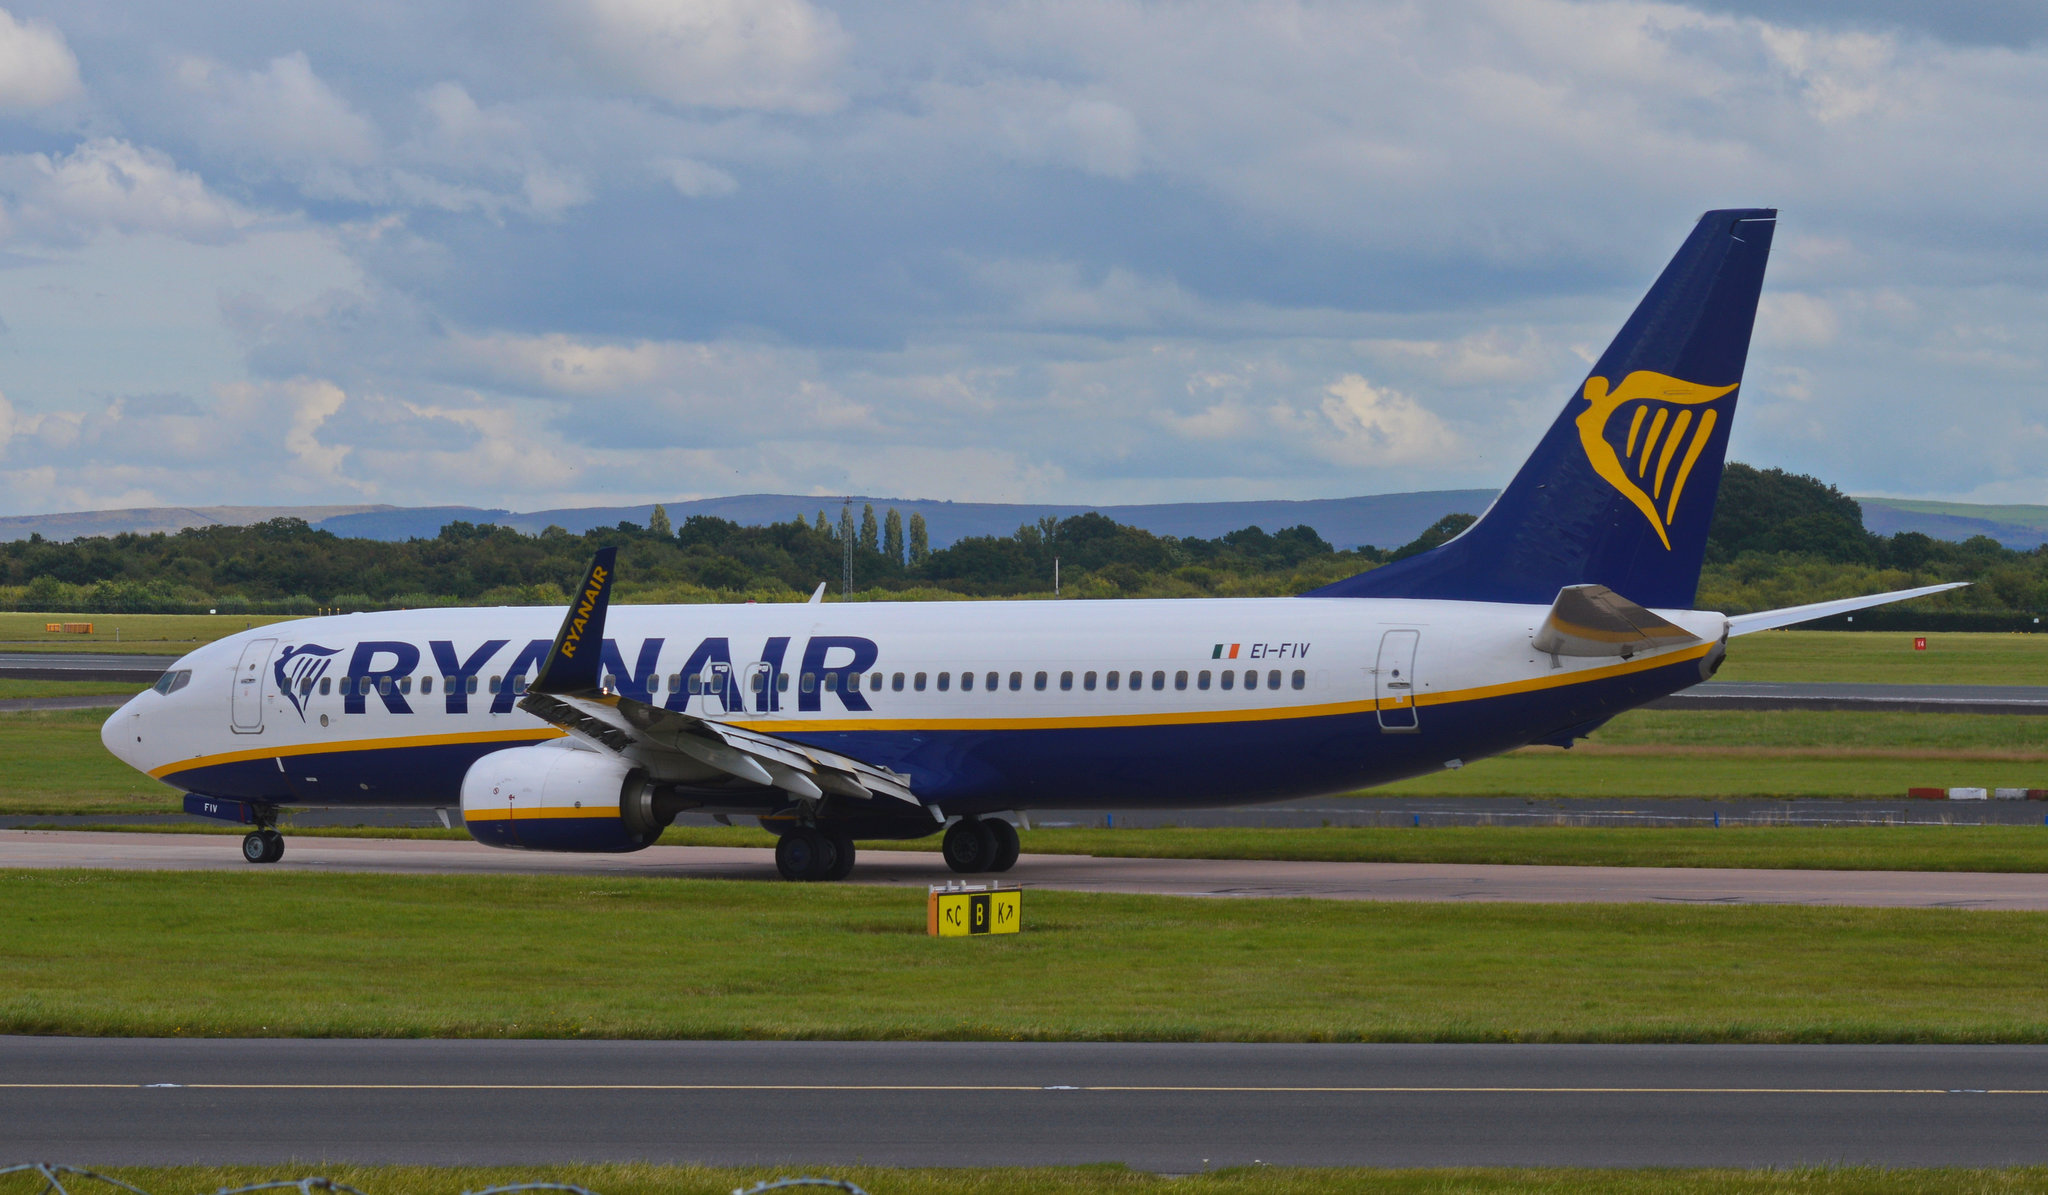 Ryanair FIV